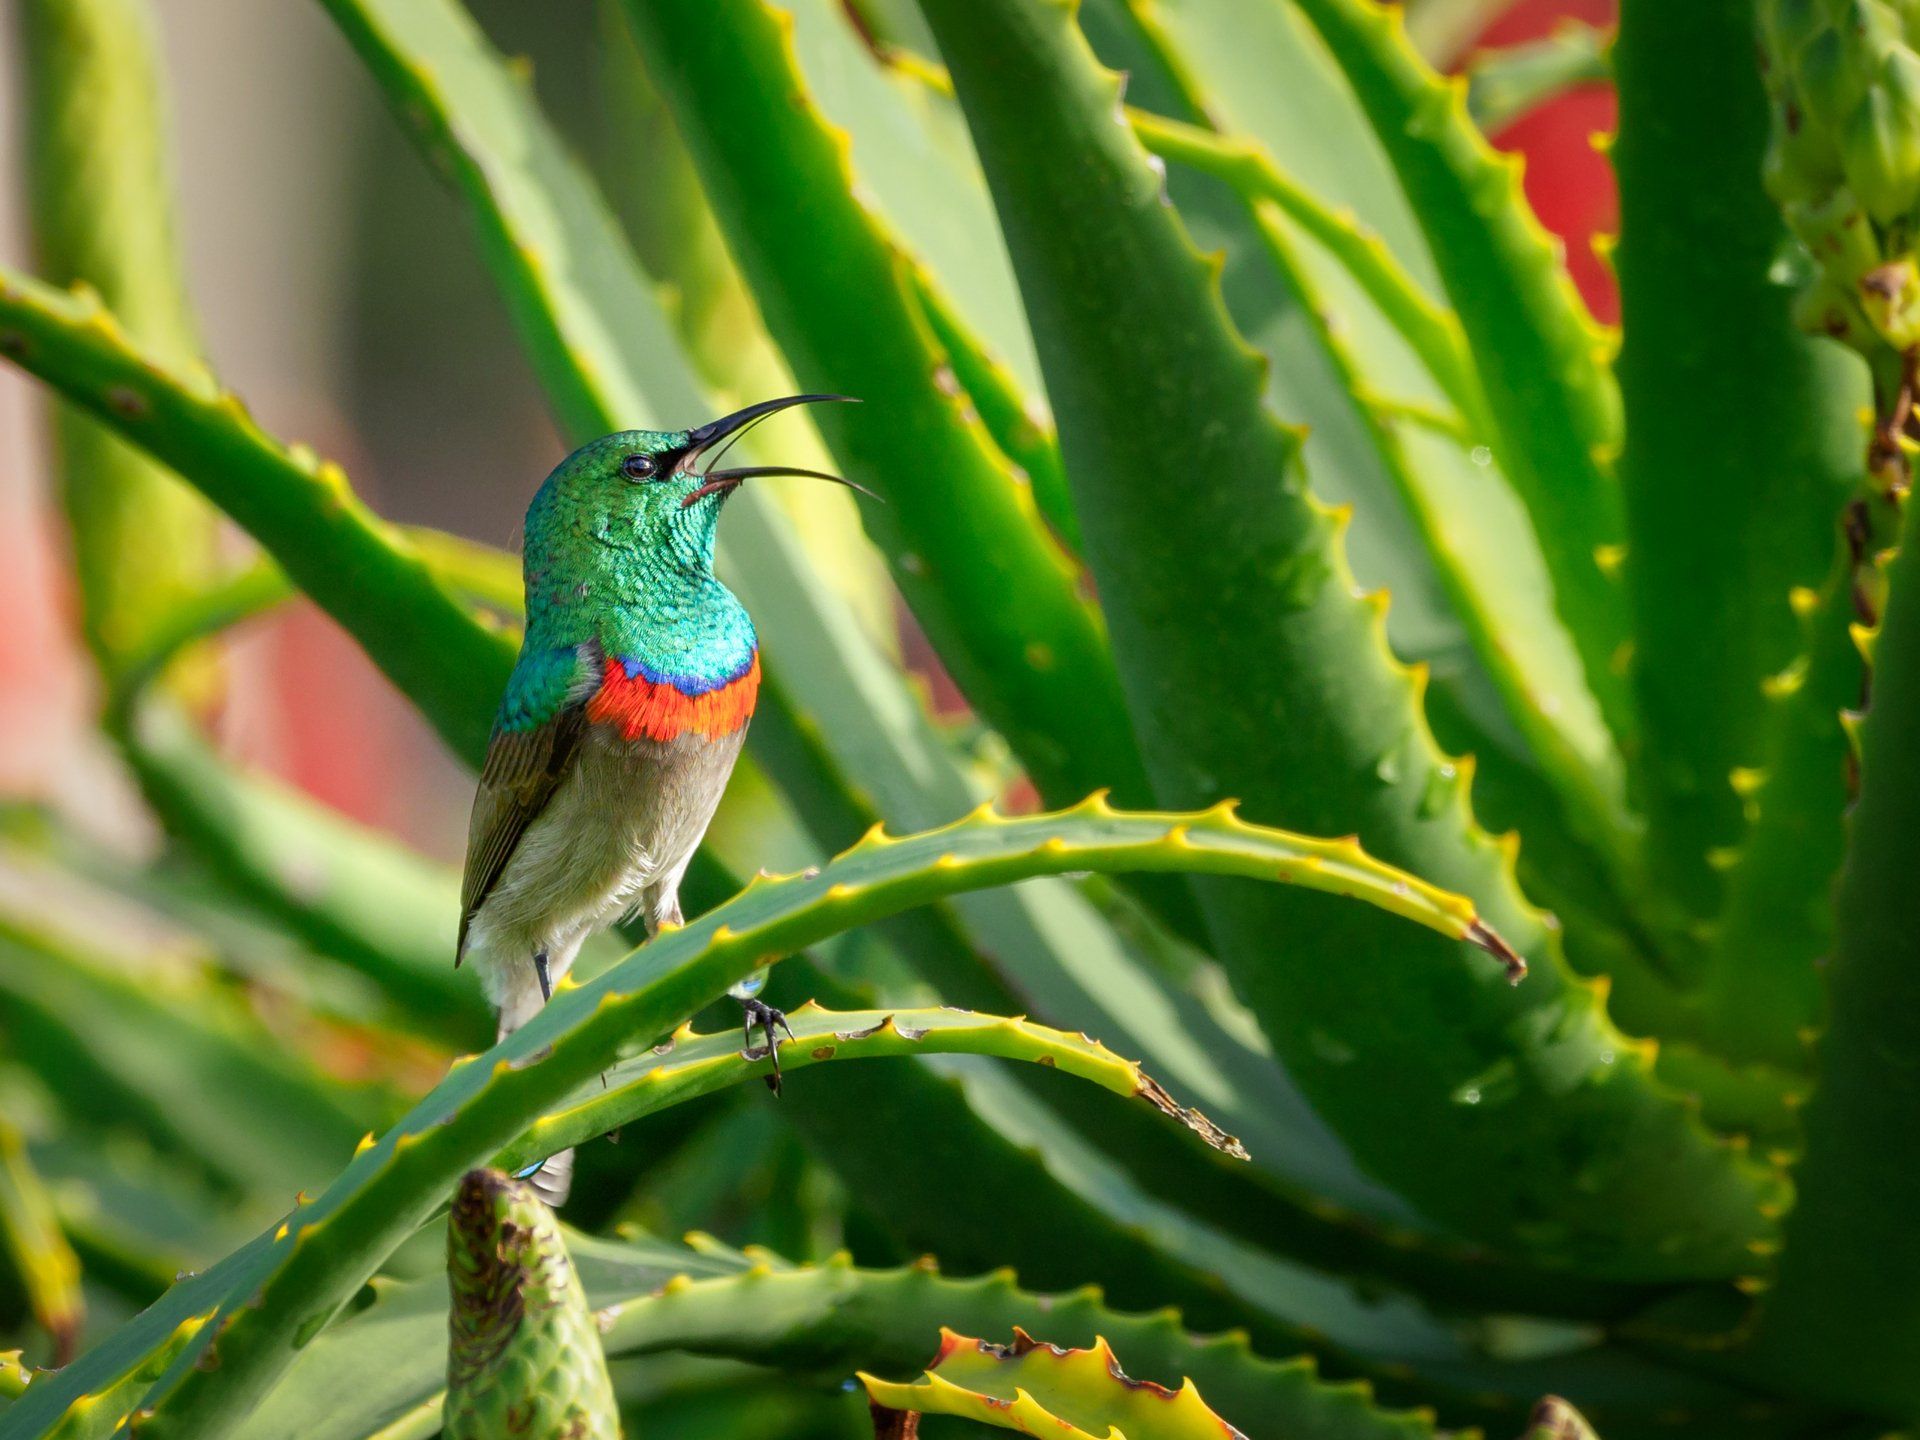 Hummingbird on cactus